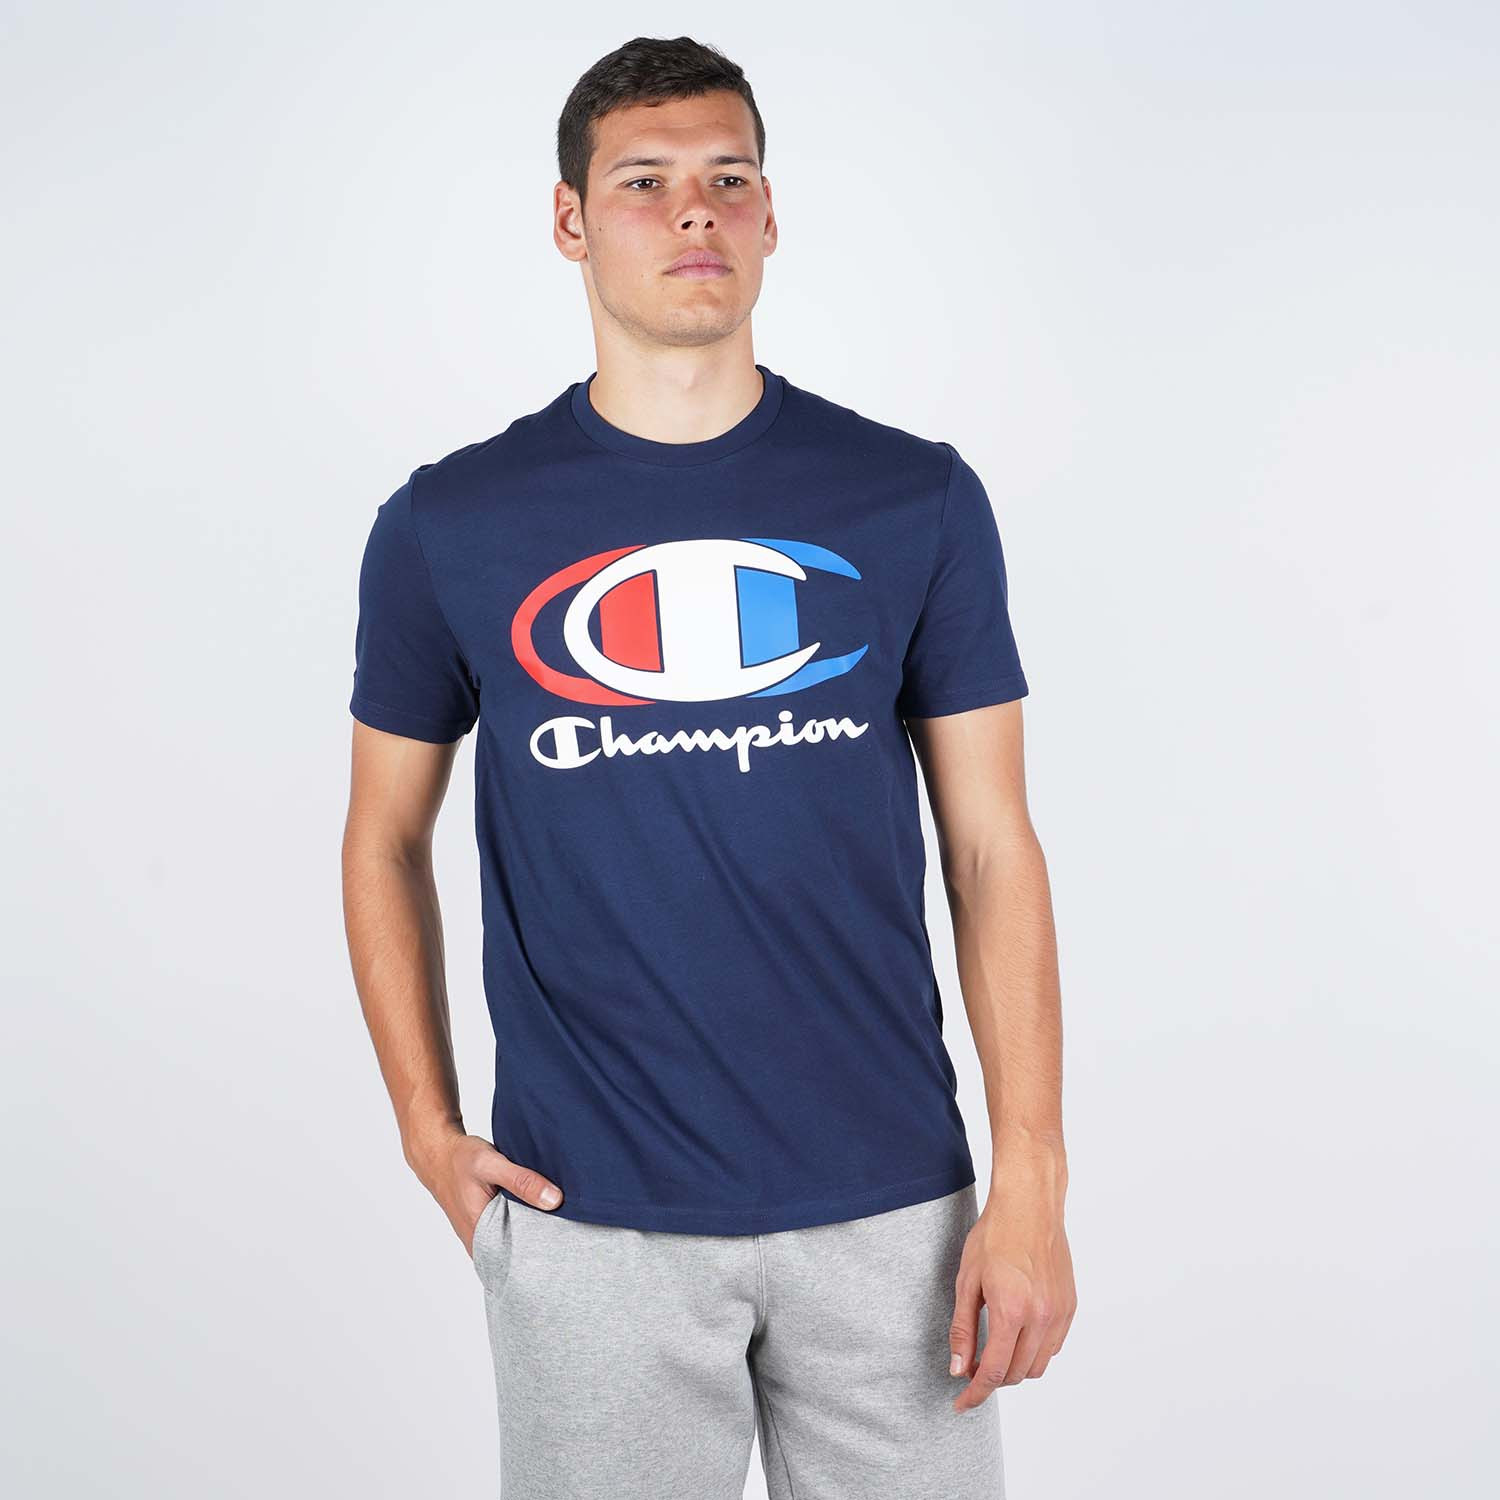 Champion Crewneck Men's T-Shirt (9000049365_1844)